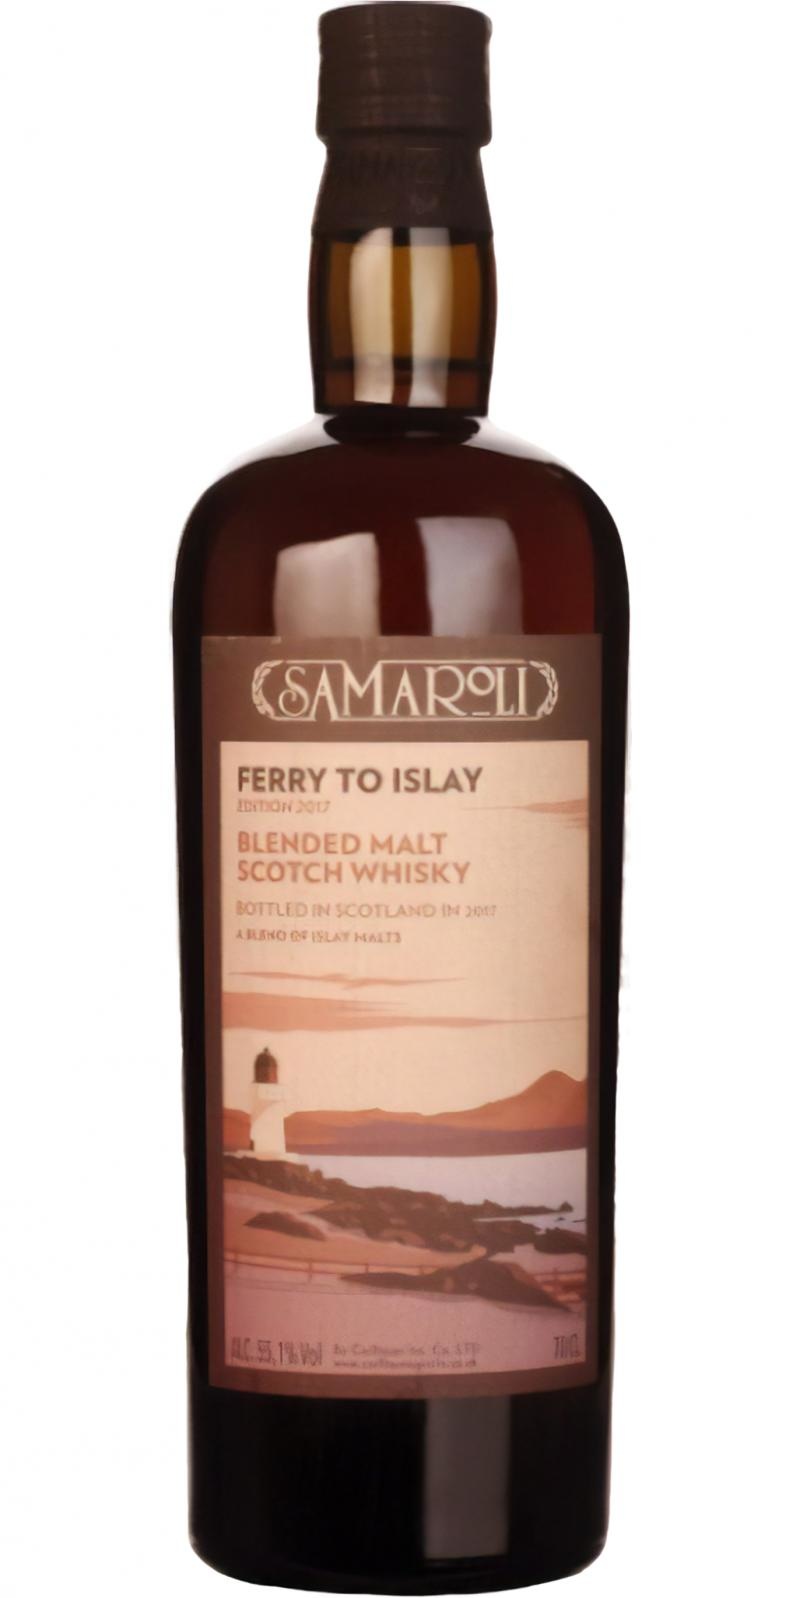 Samaroli “Ferry to Islay” 2017 (72 bottles produced) Blended Malt Scotch Whisky 750ml